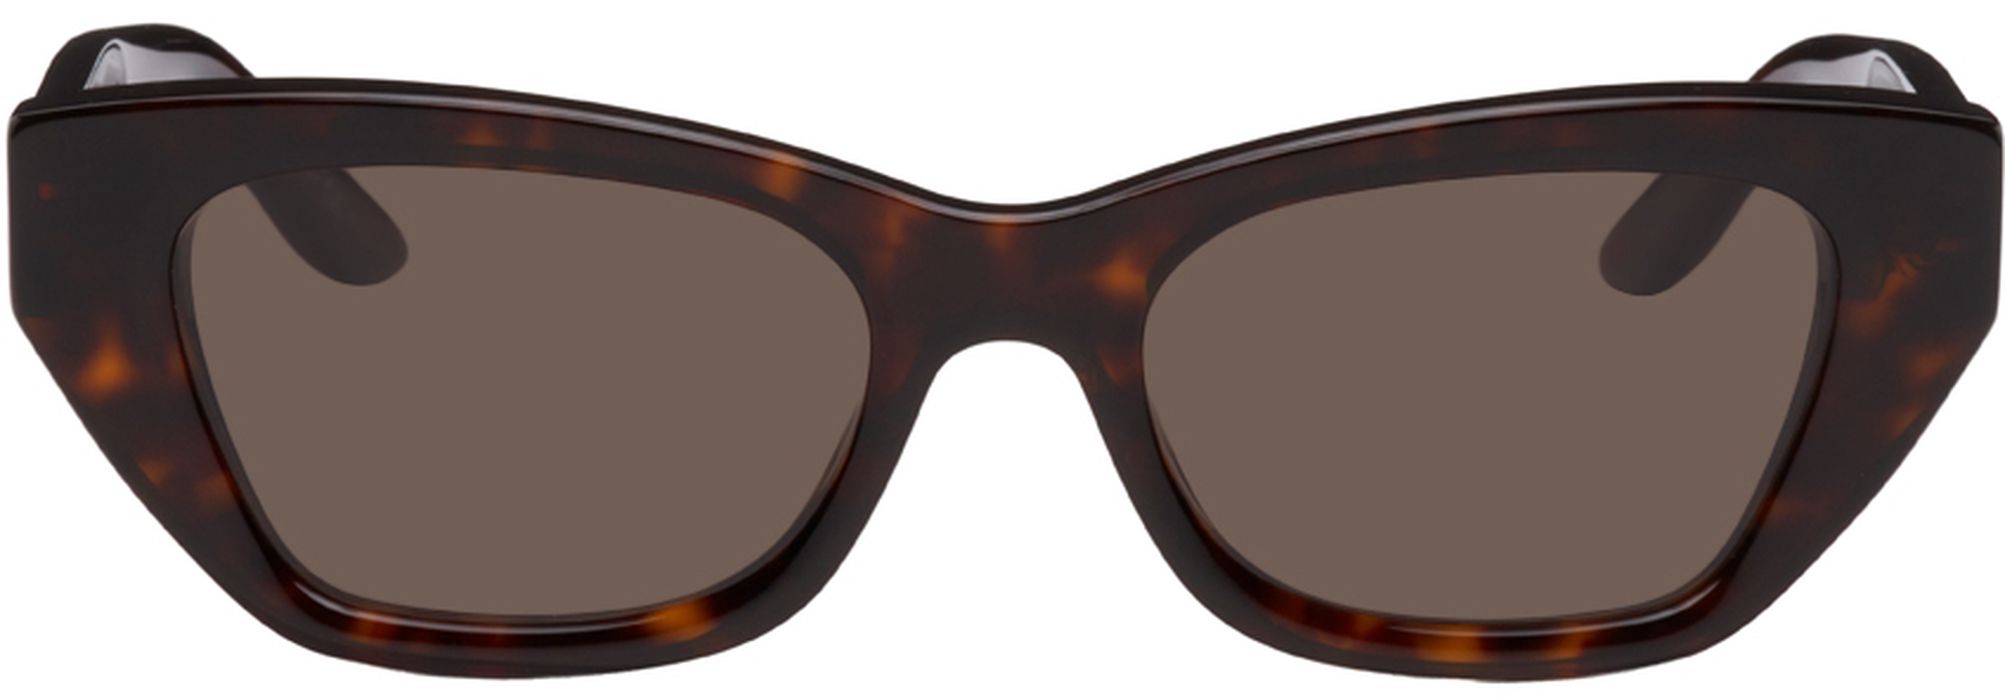 Givenchy Tortoiseshell Cat-Eye Sunglasses